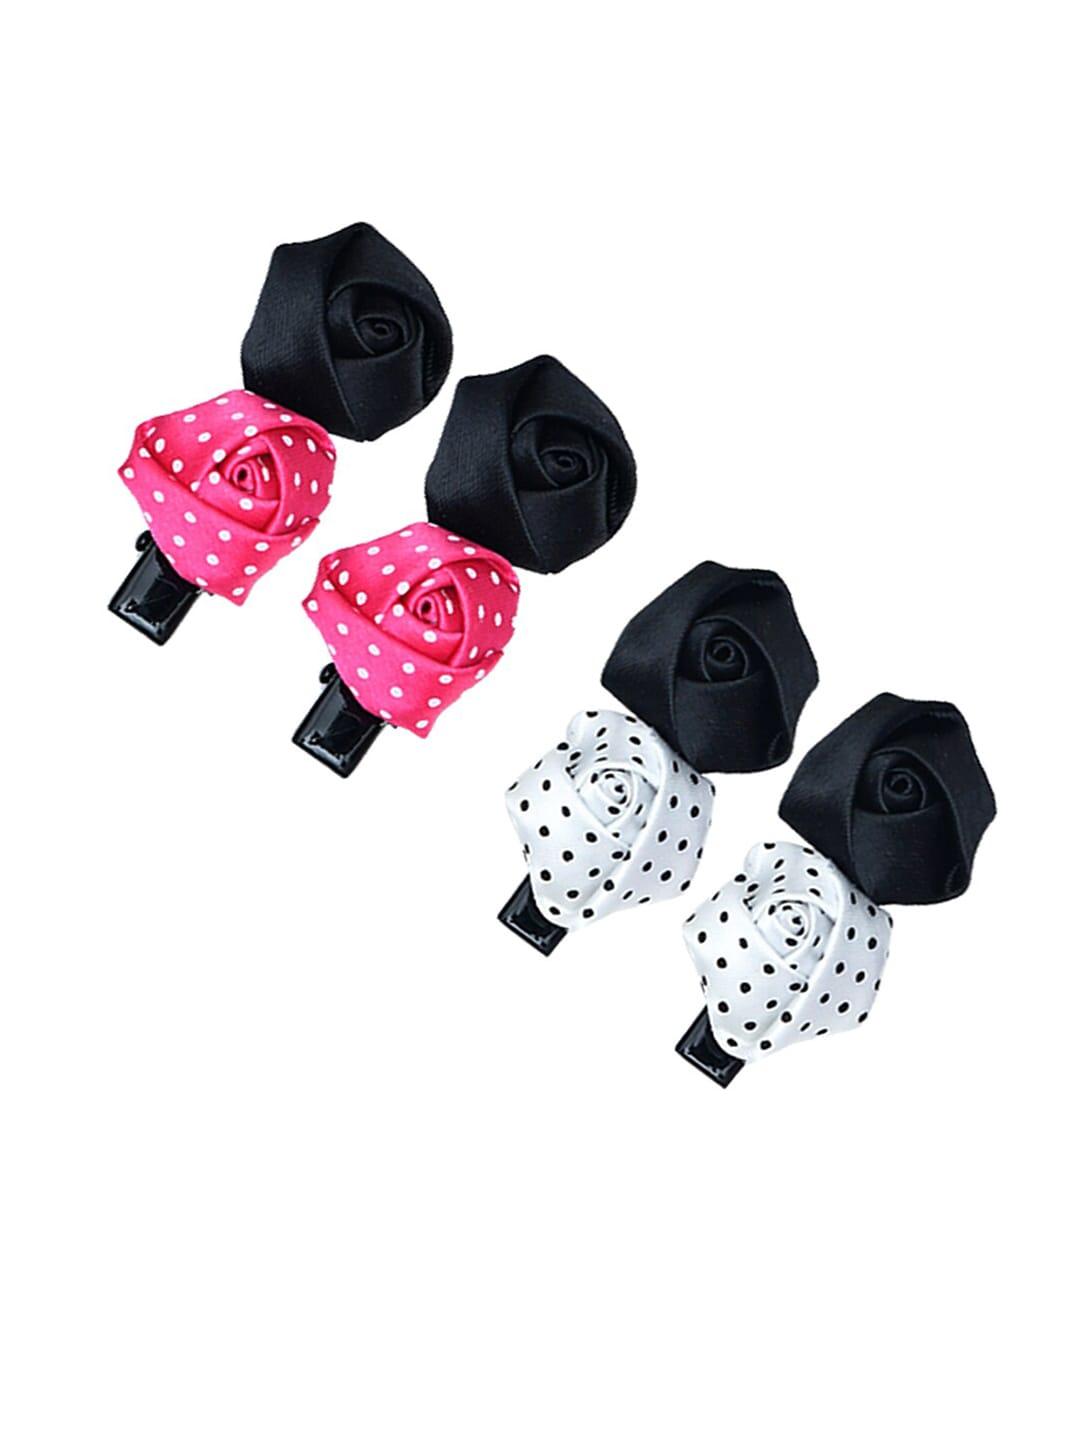 funkrafts girls pink & white set of alligator 4 hair clips set